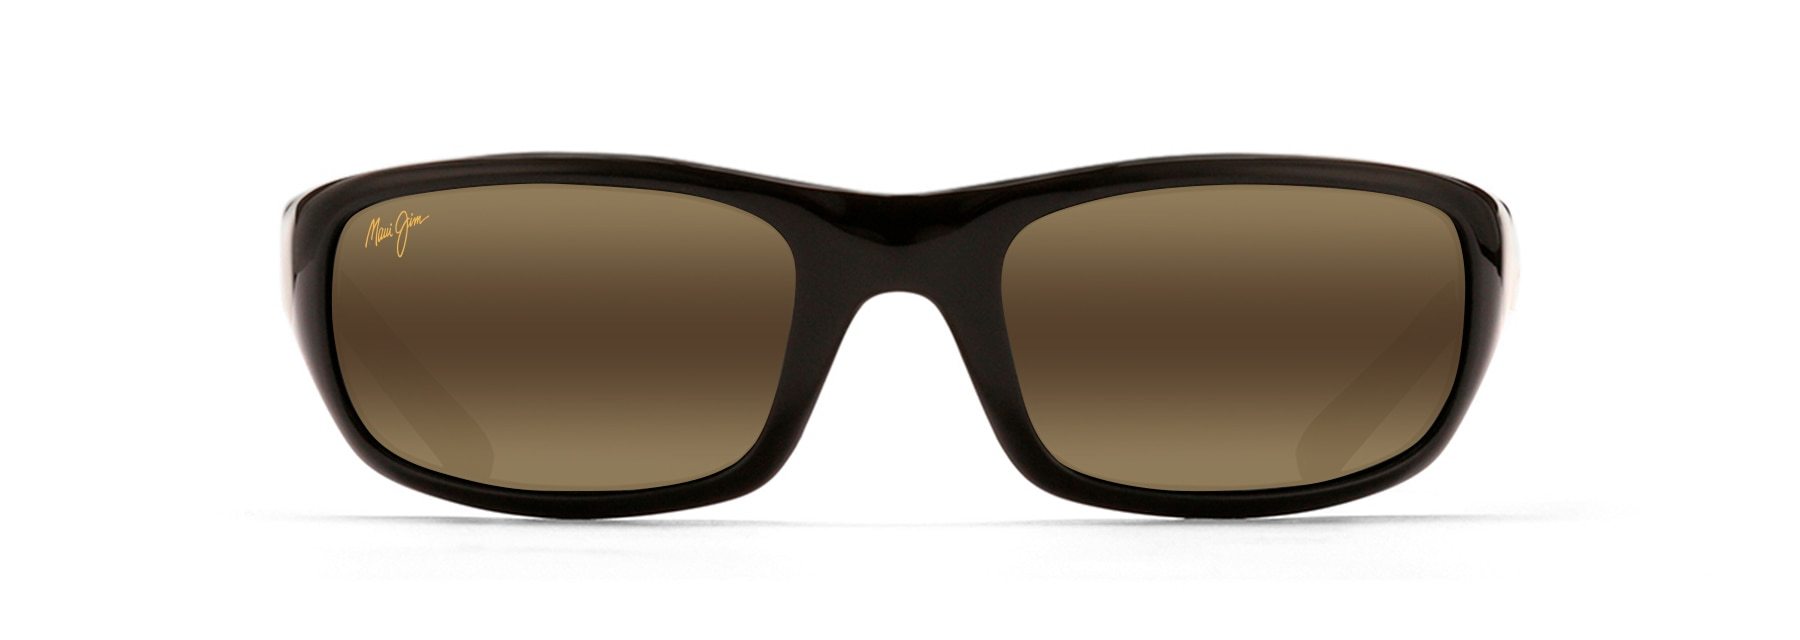 MyMaui Stingray MM103-002 Sunglasses